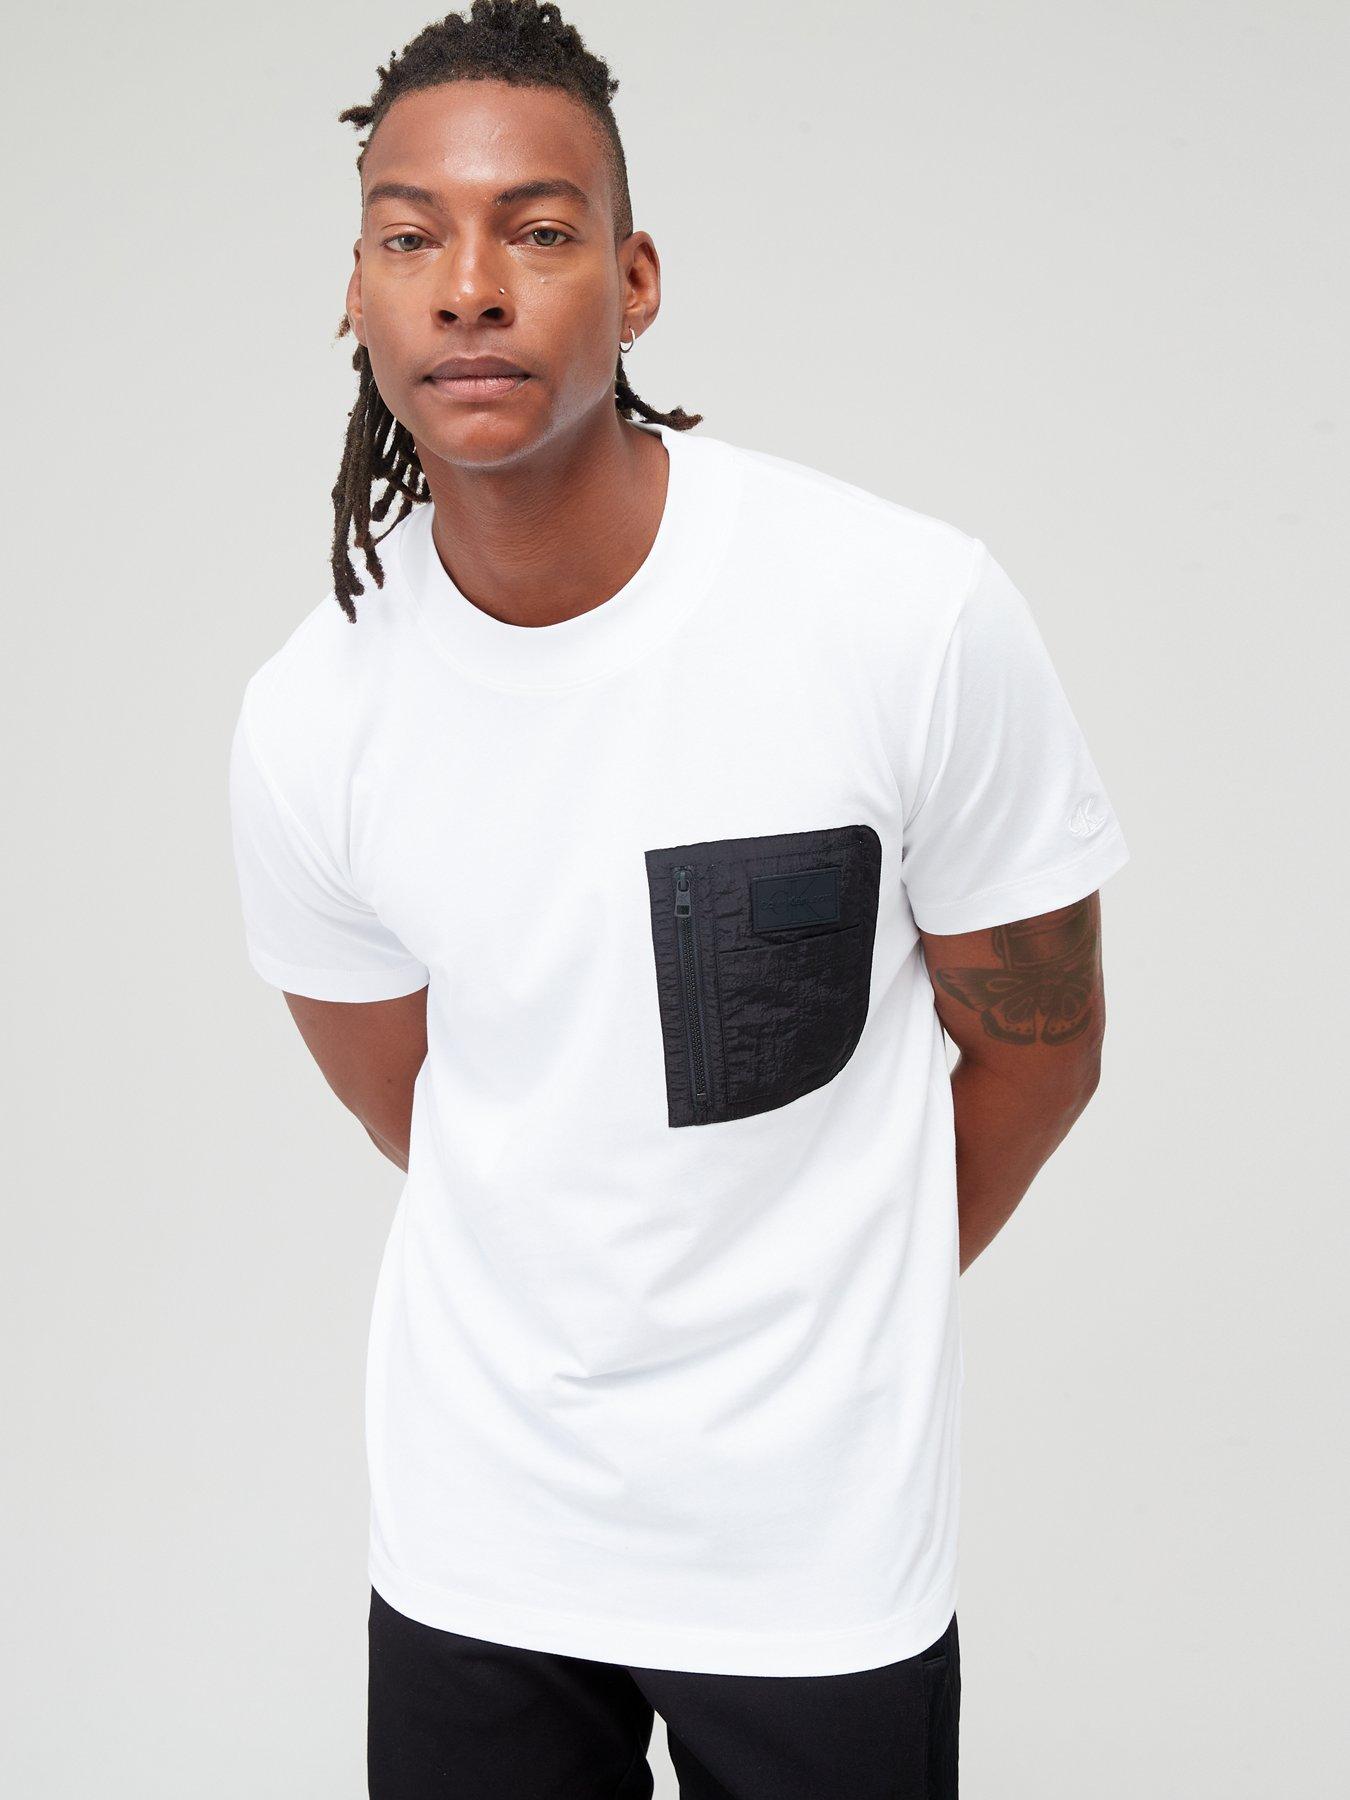 Calvin klein jeans Mixed Monogram Short Sleeve T-Shirt Black